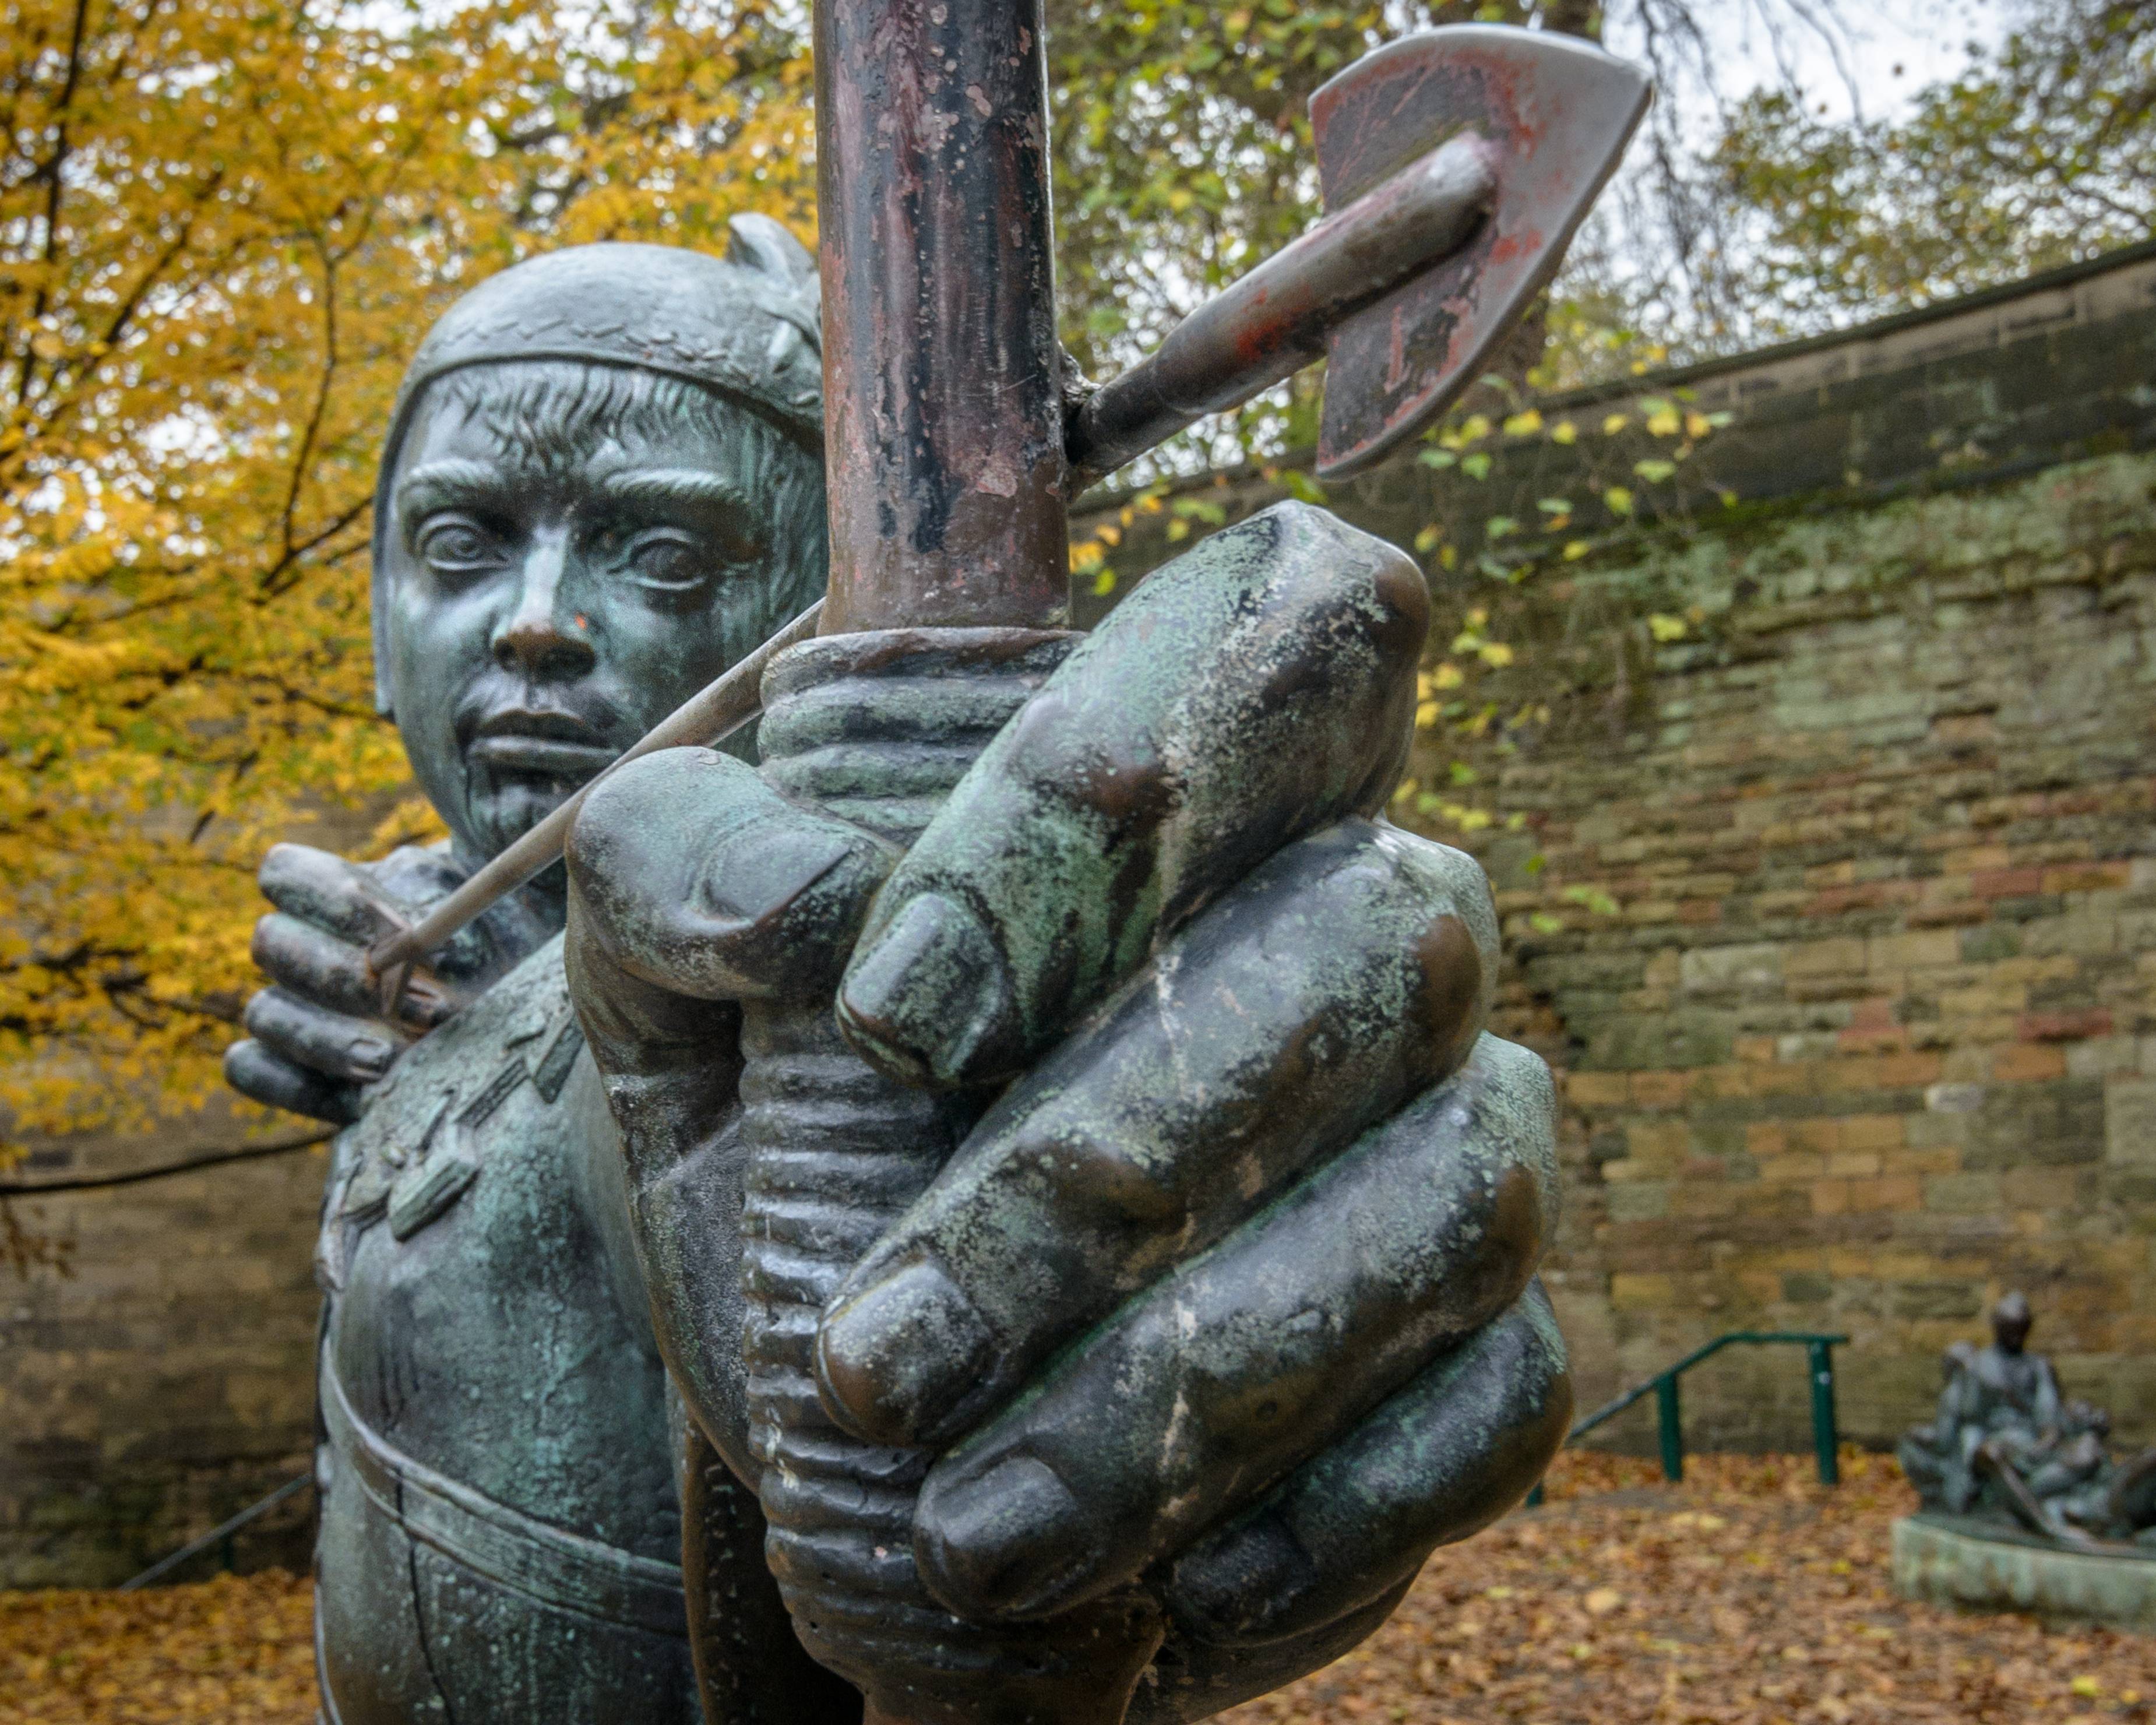 Robin Hood statue at Nottingham Castle by @trommelkopf